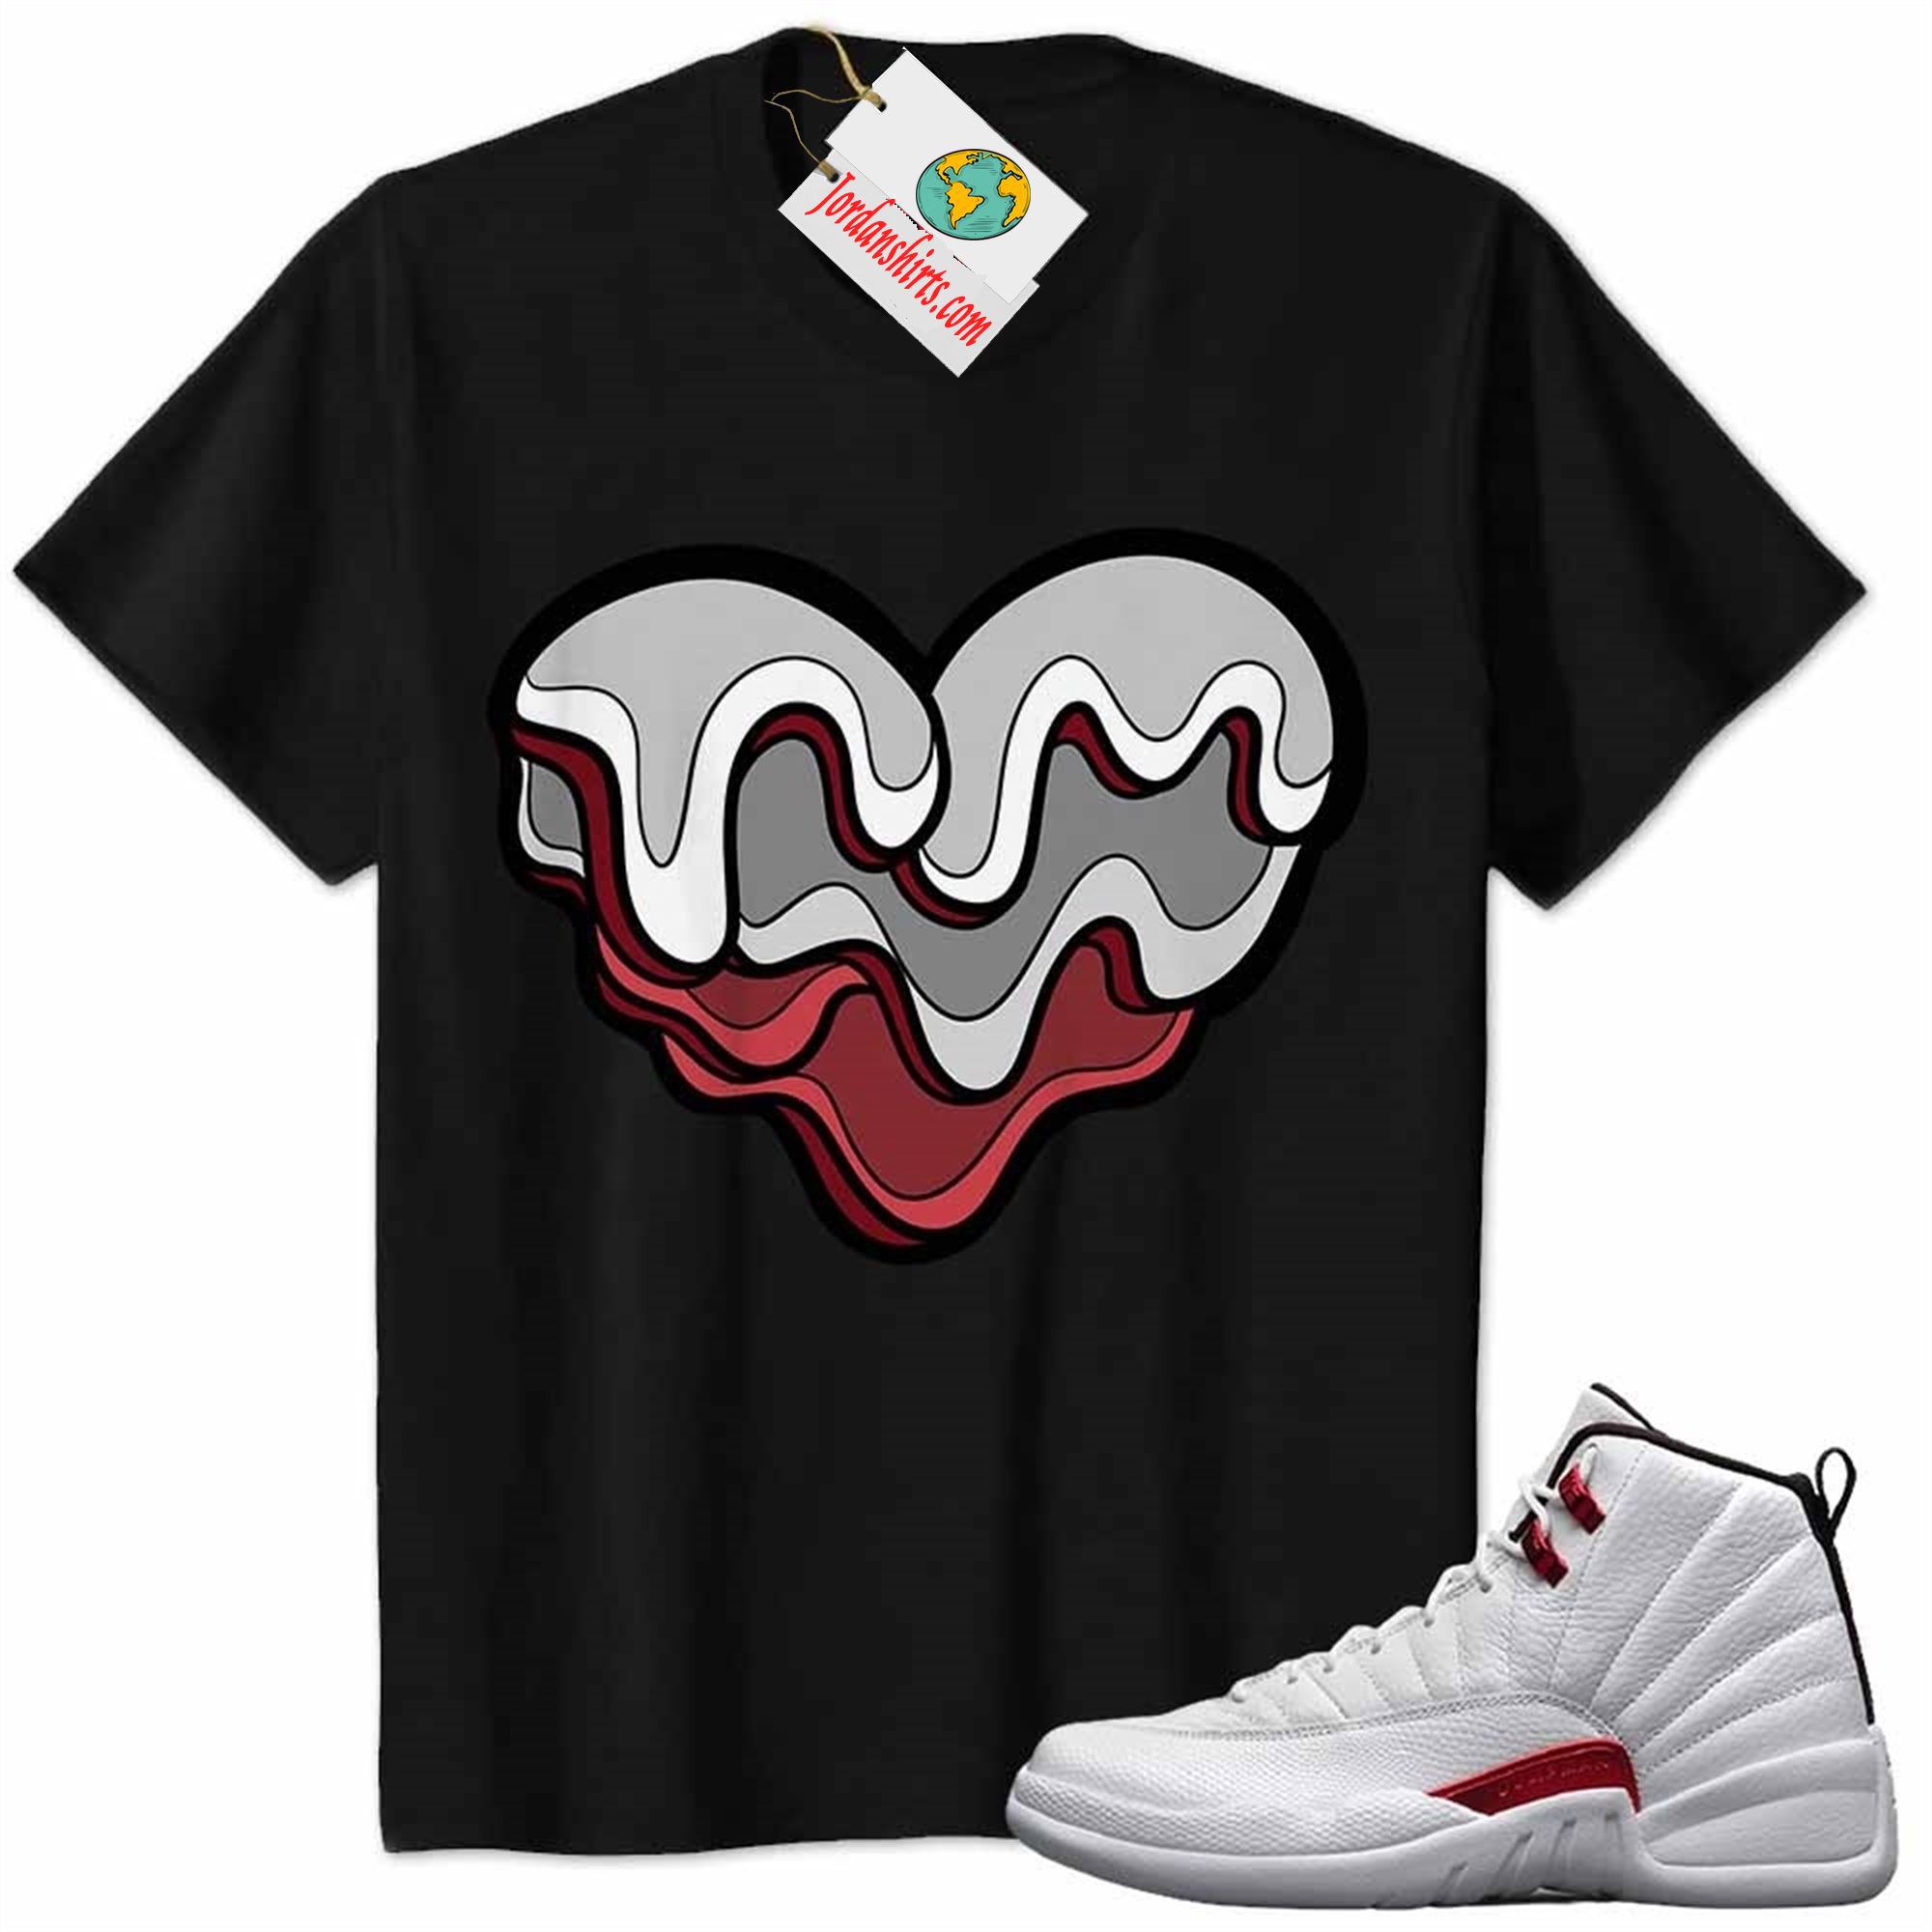 Jordan 12 Shirt, Melt Dripping Heart Black Air Jordan 12 Twist 12s Full Size Up To 5xl